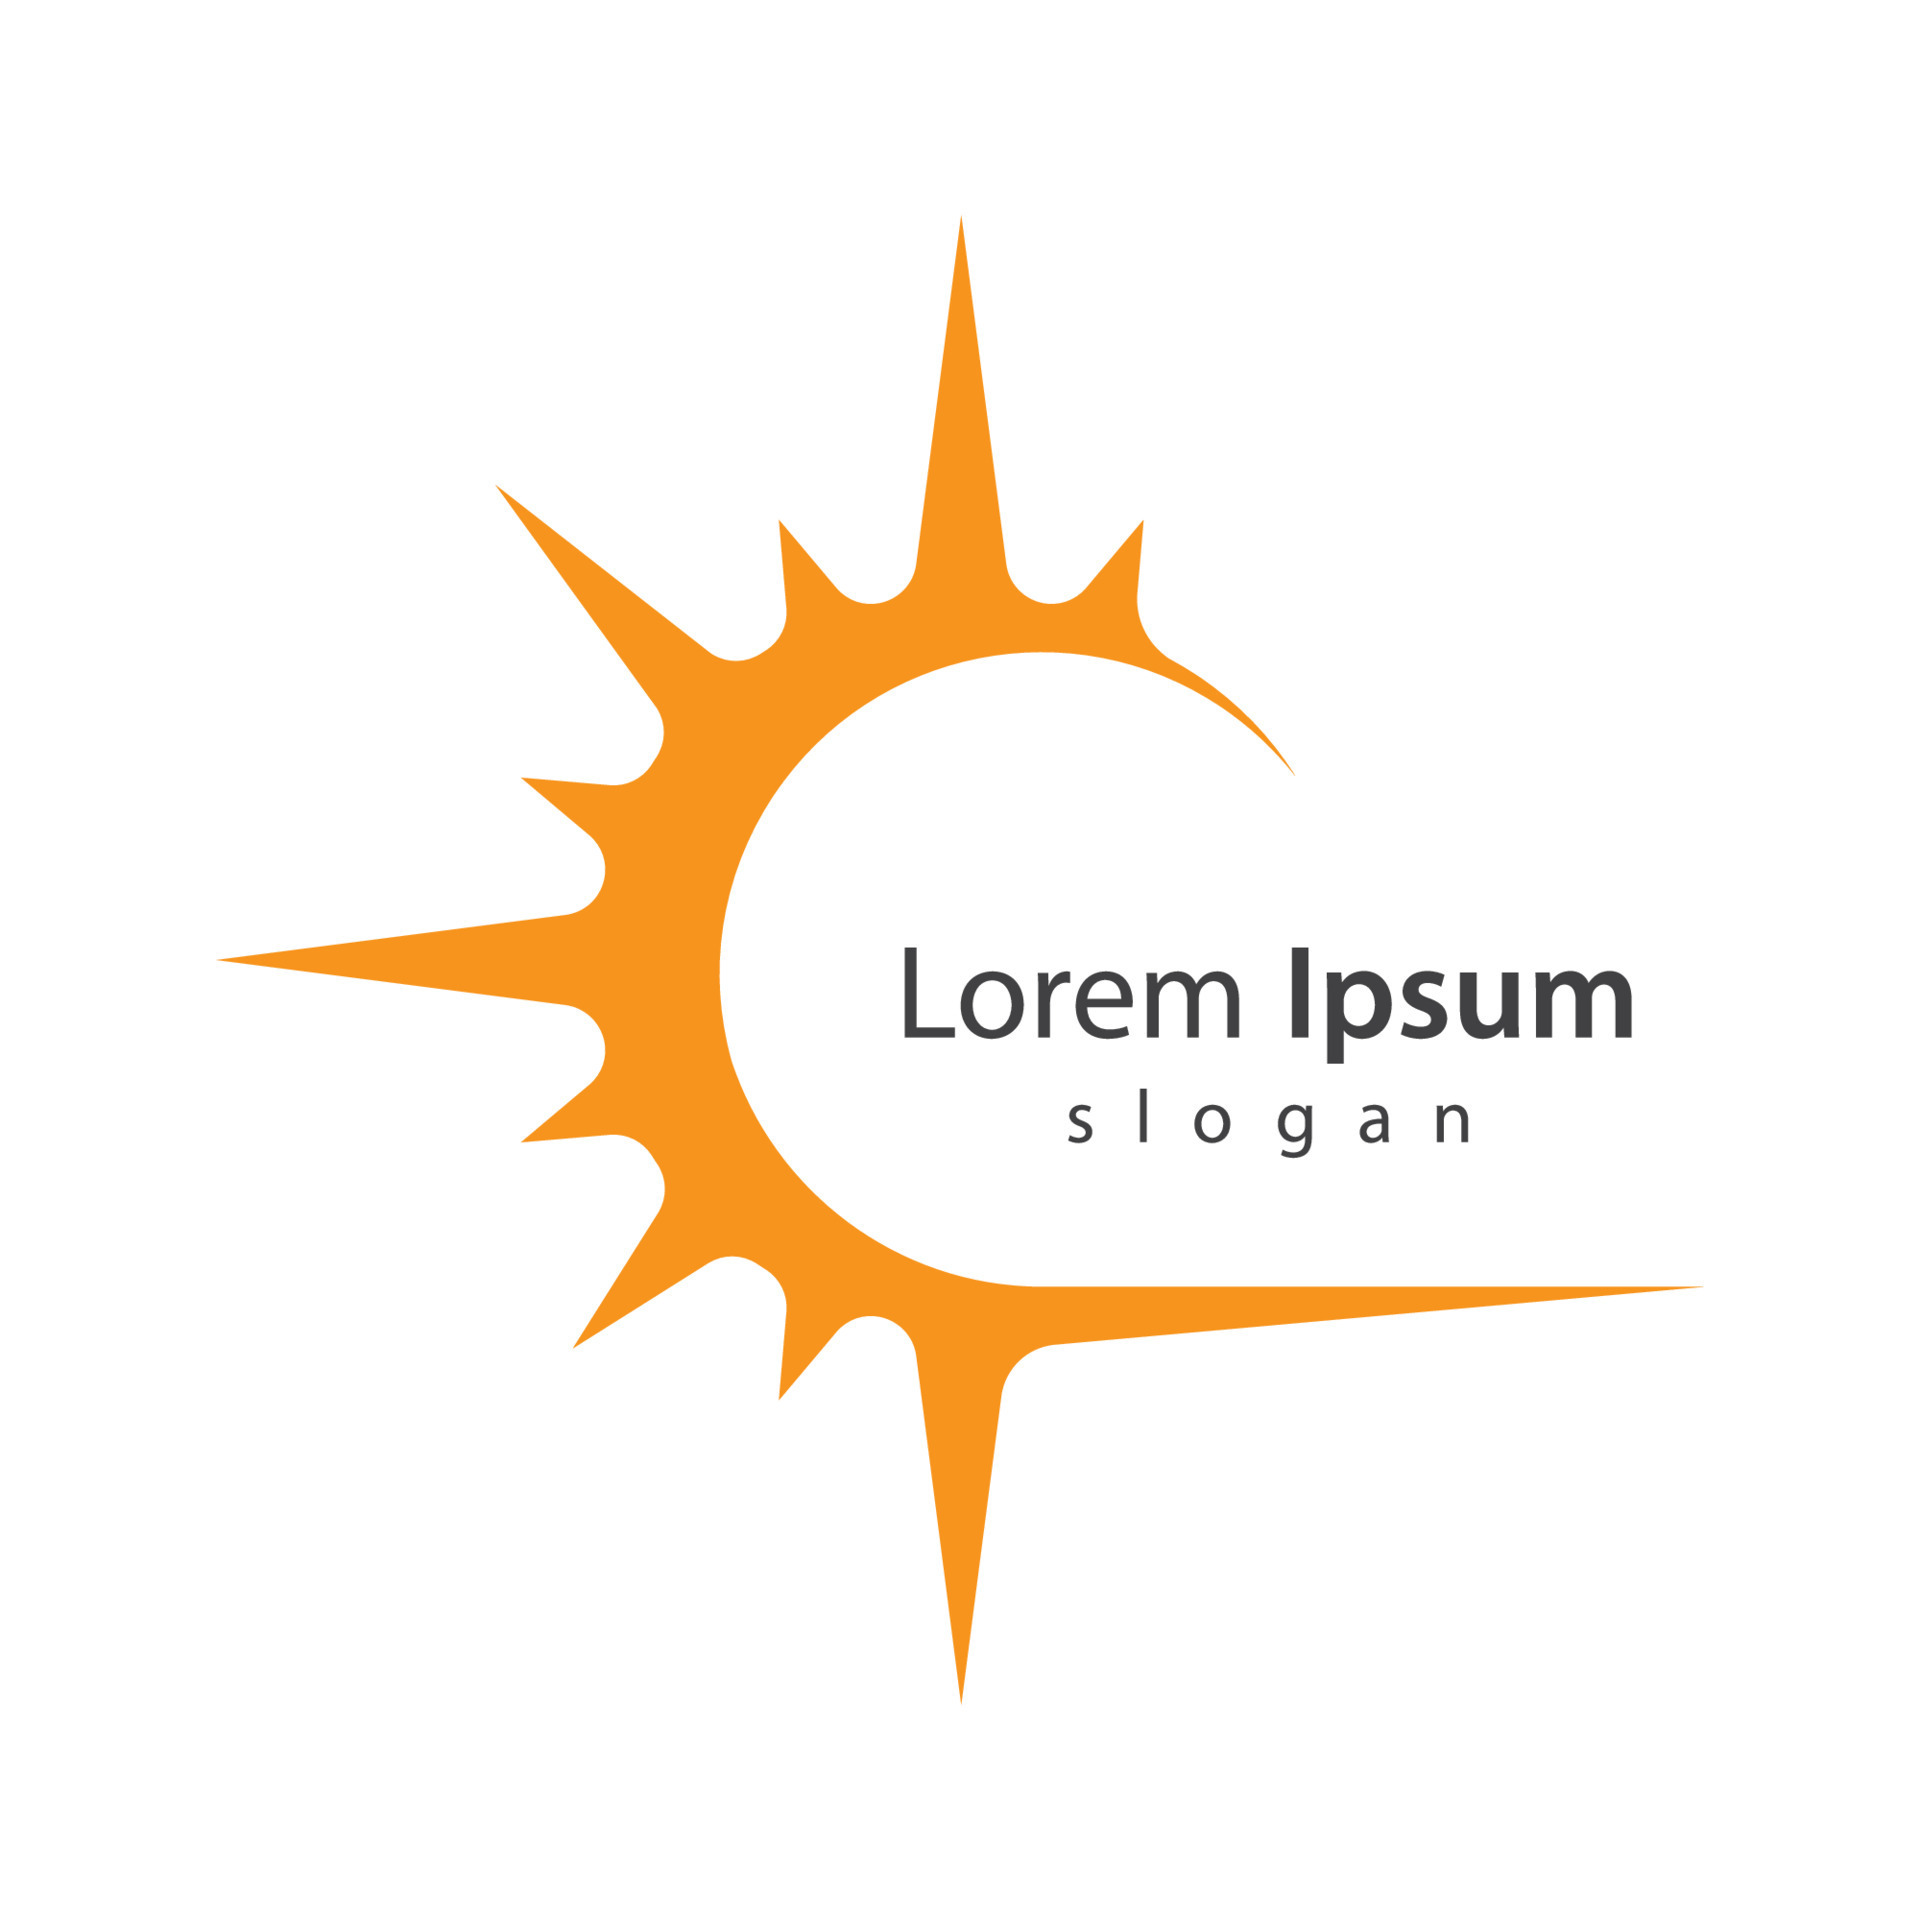 Sun logo image illustration